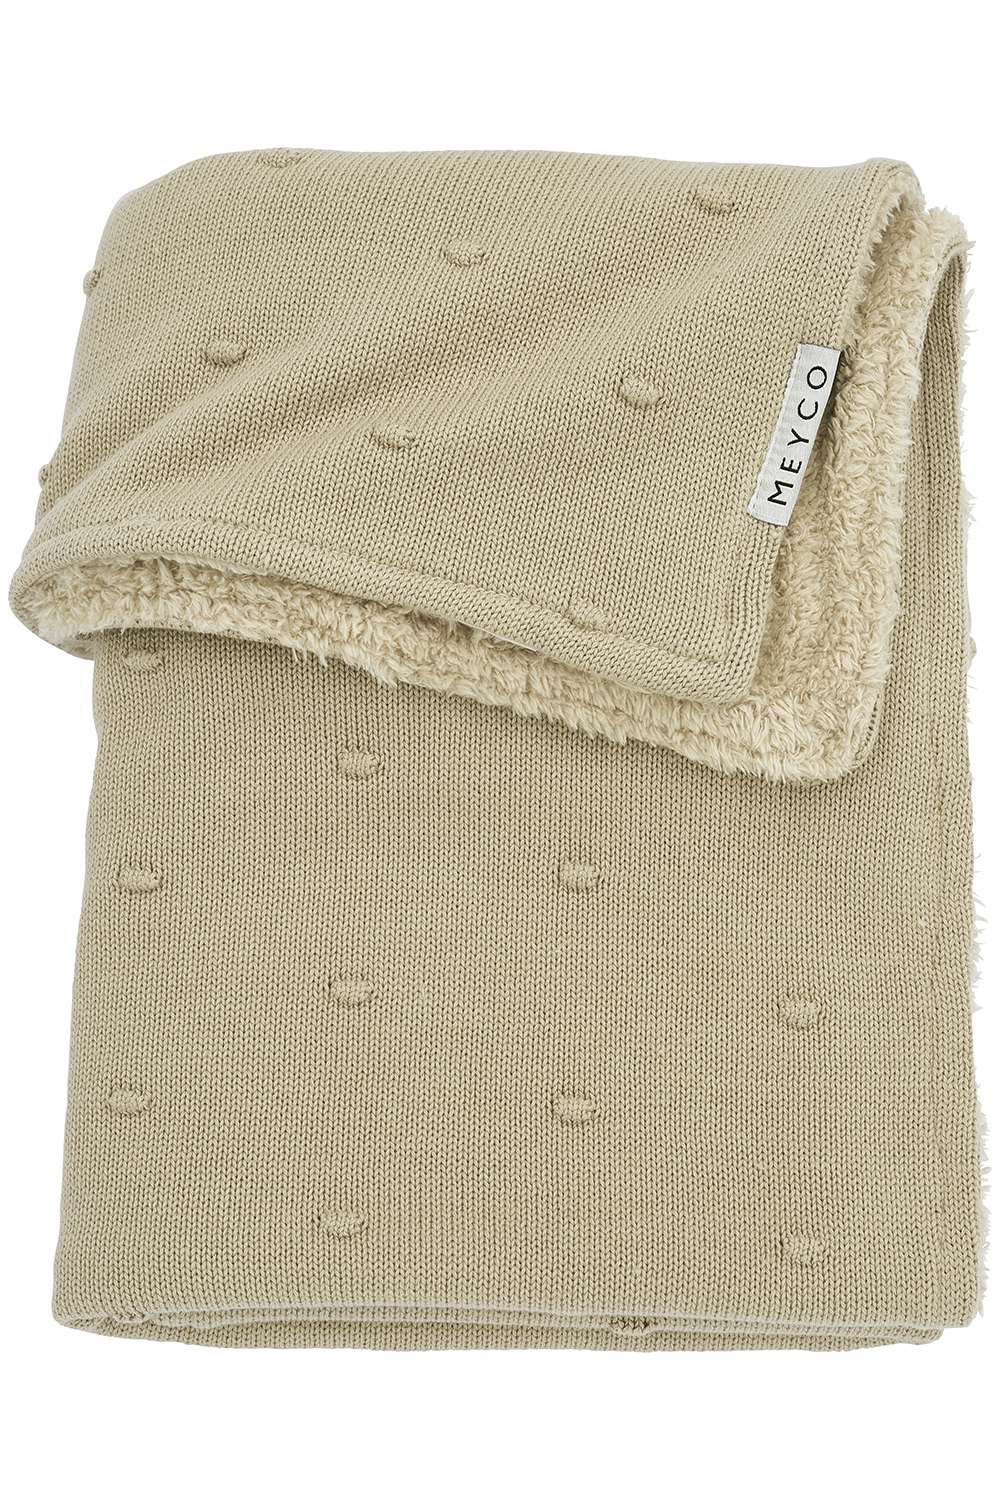 Crib Blanket Mini Knots Teddy - Sand - 75x100cm